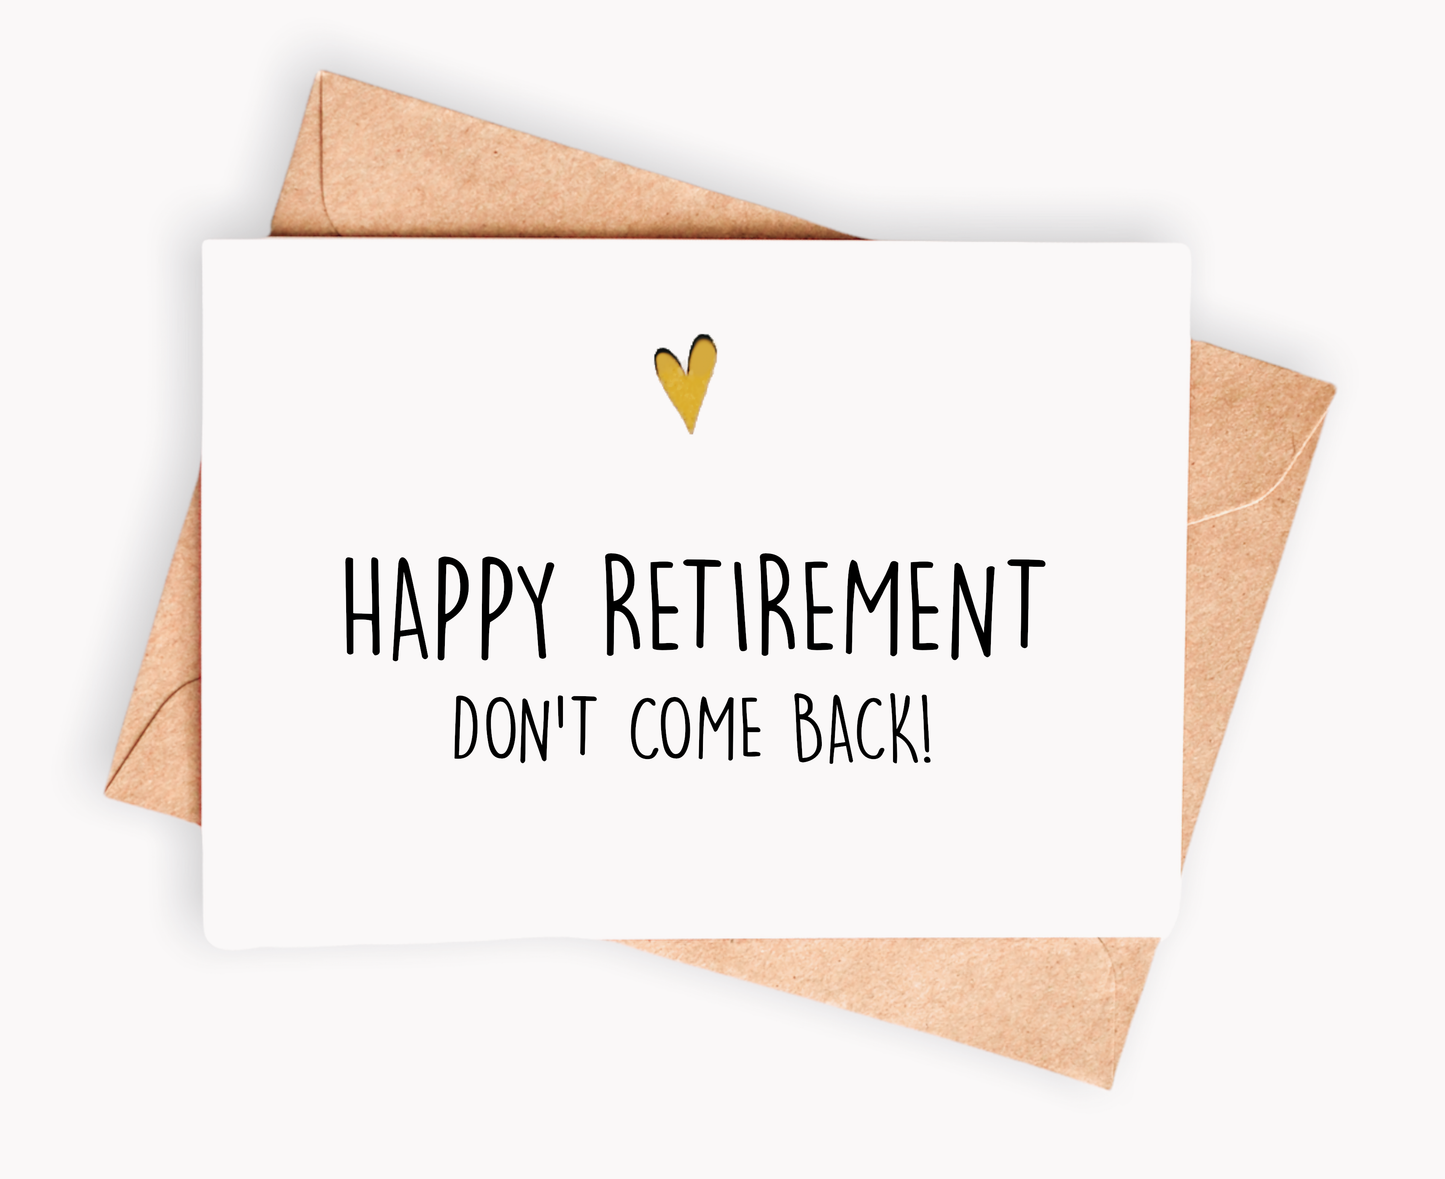 Happy retirement. Don't Come Back!